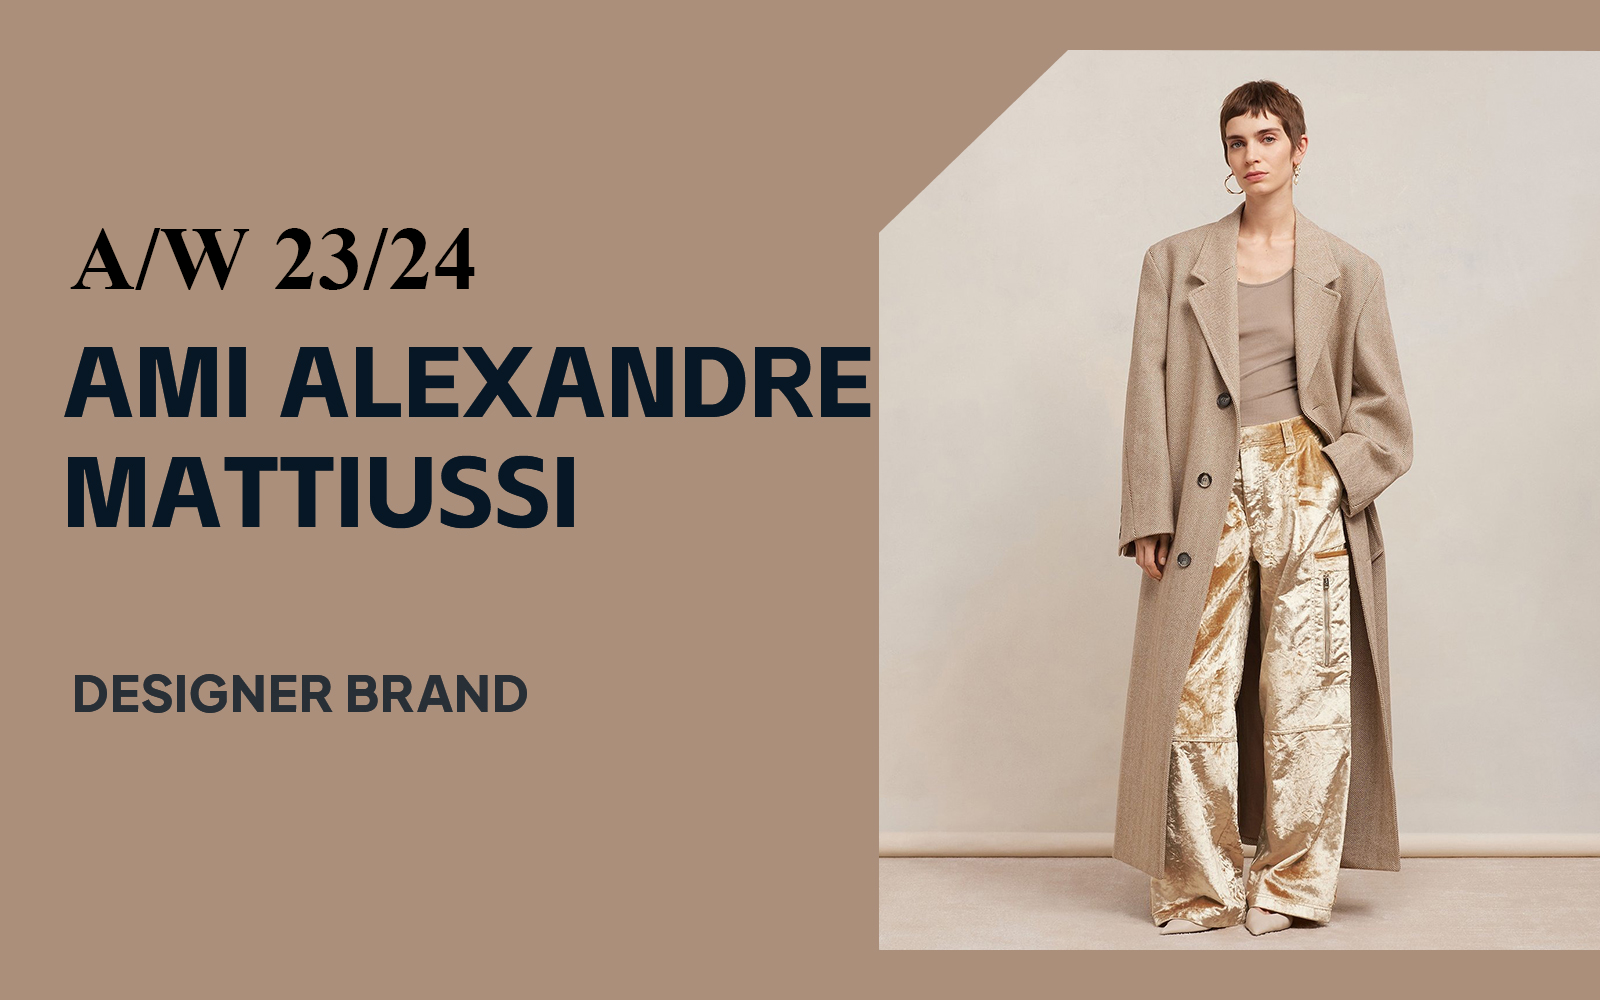 Tranquility Luxury-- The Analysis of Ami Alexandre Mattiussi The Womenswear Designer Brand